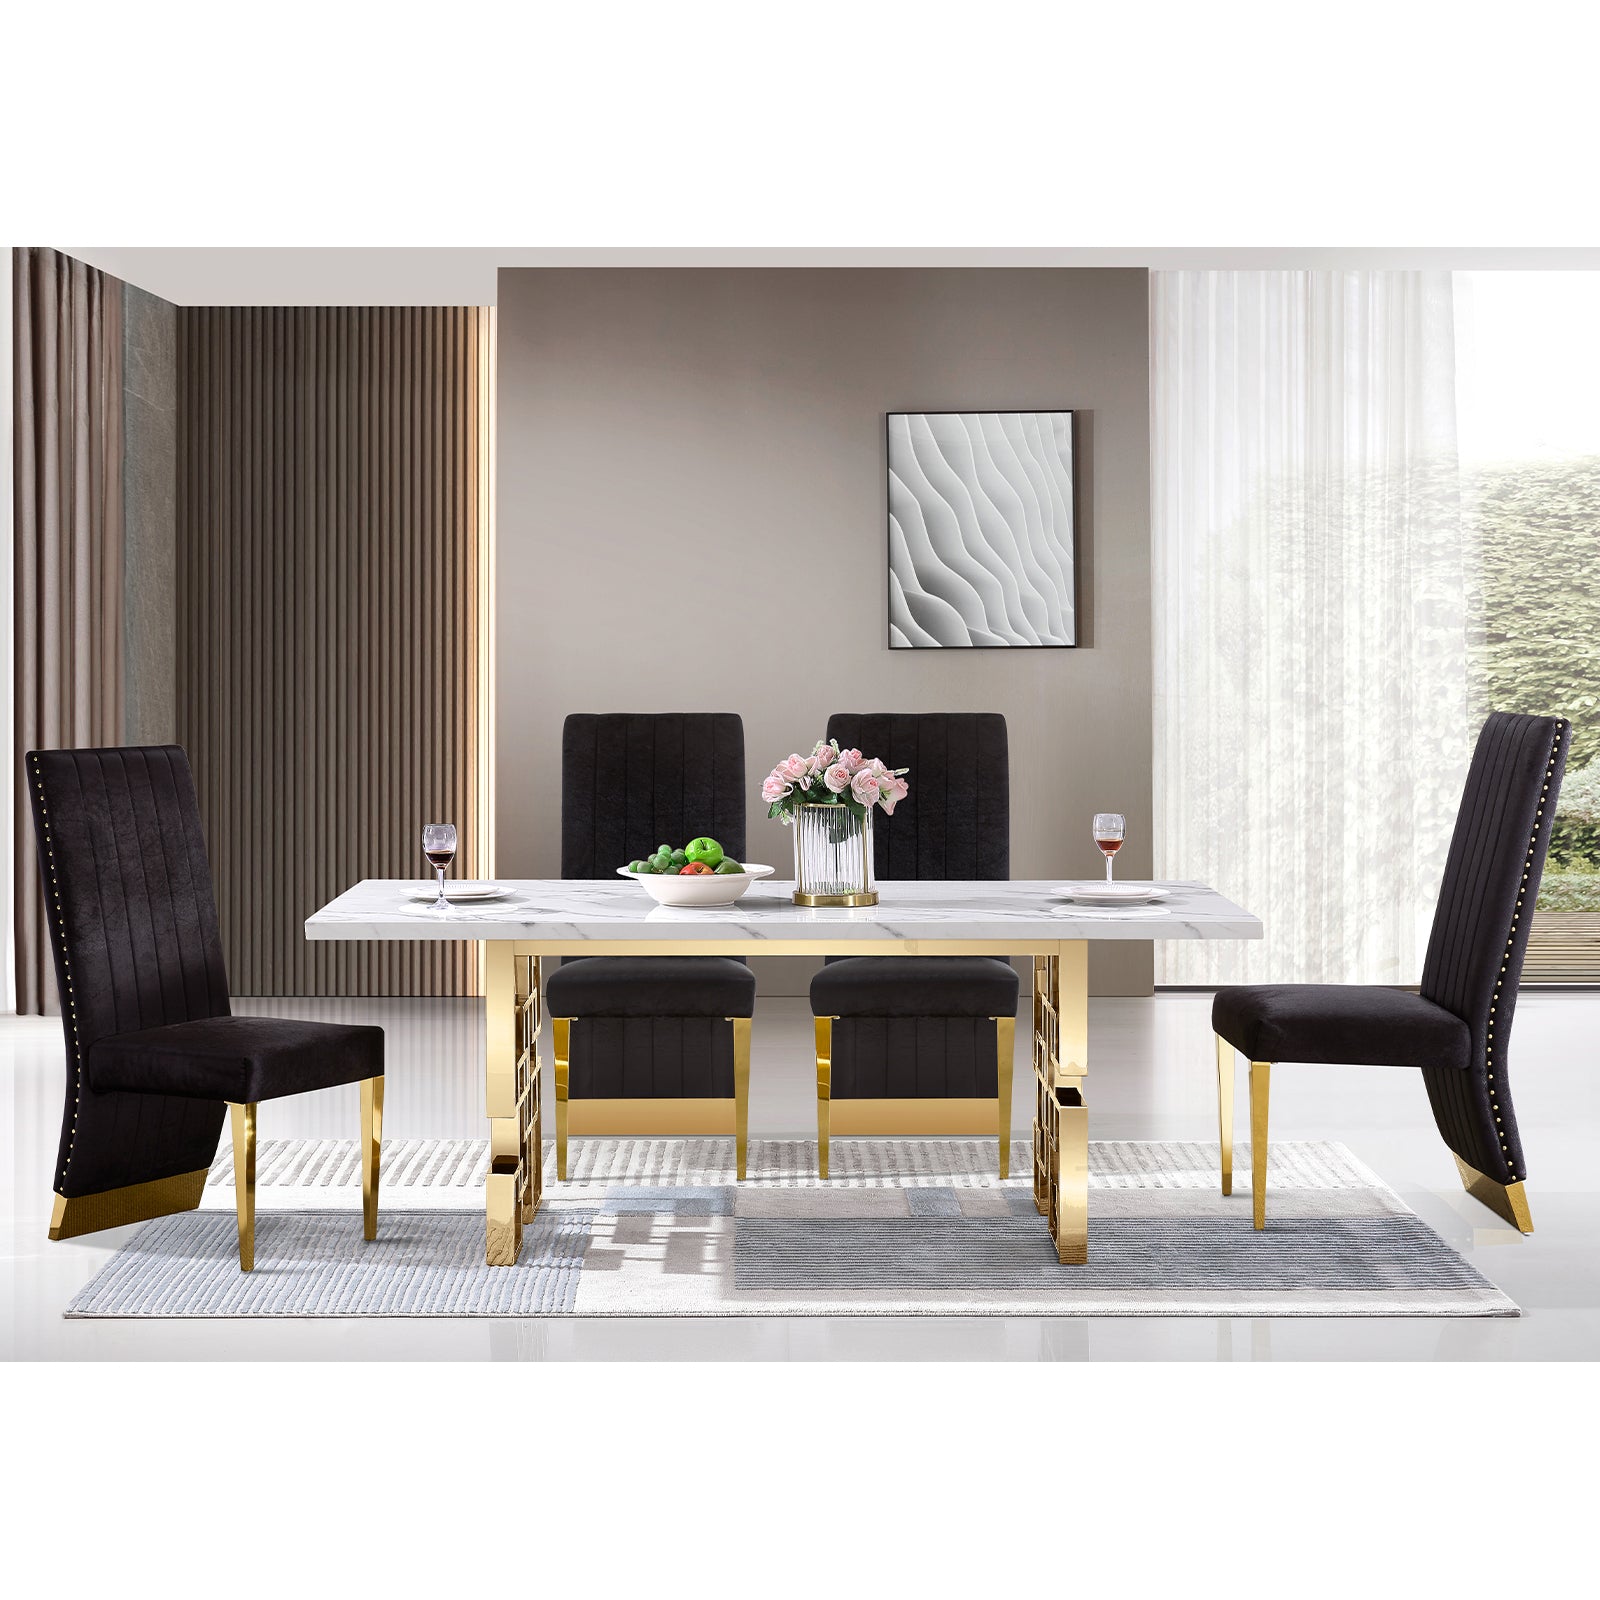 697 Set | AUZ Black and gold Dining room Sets for 6